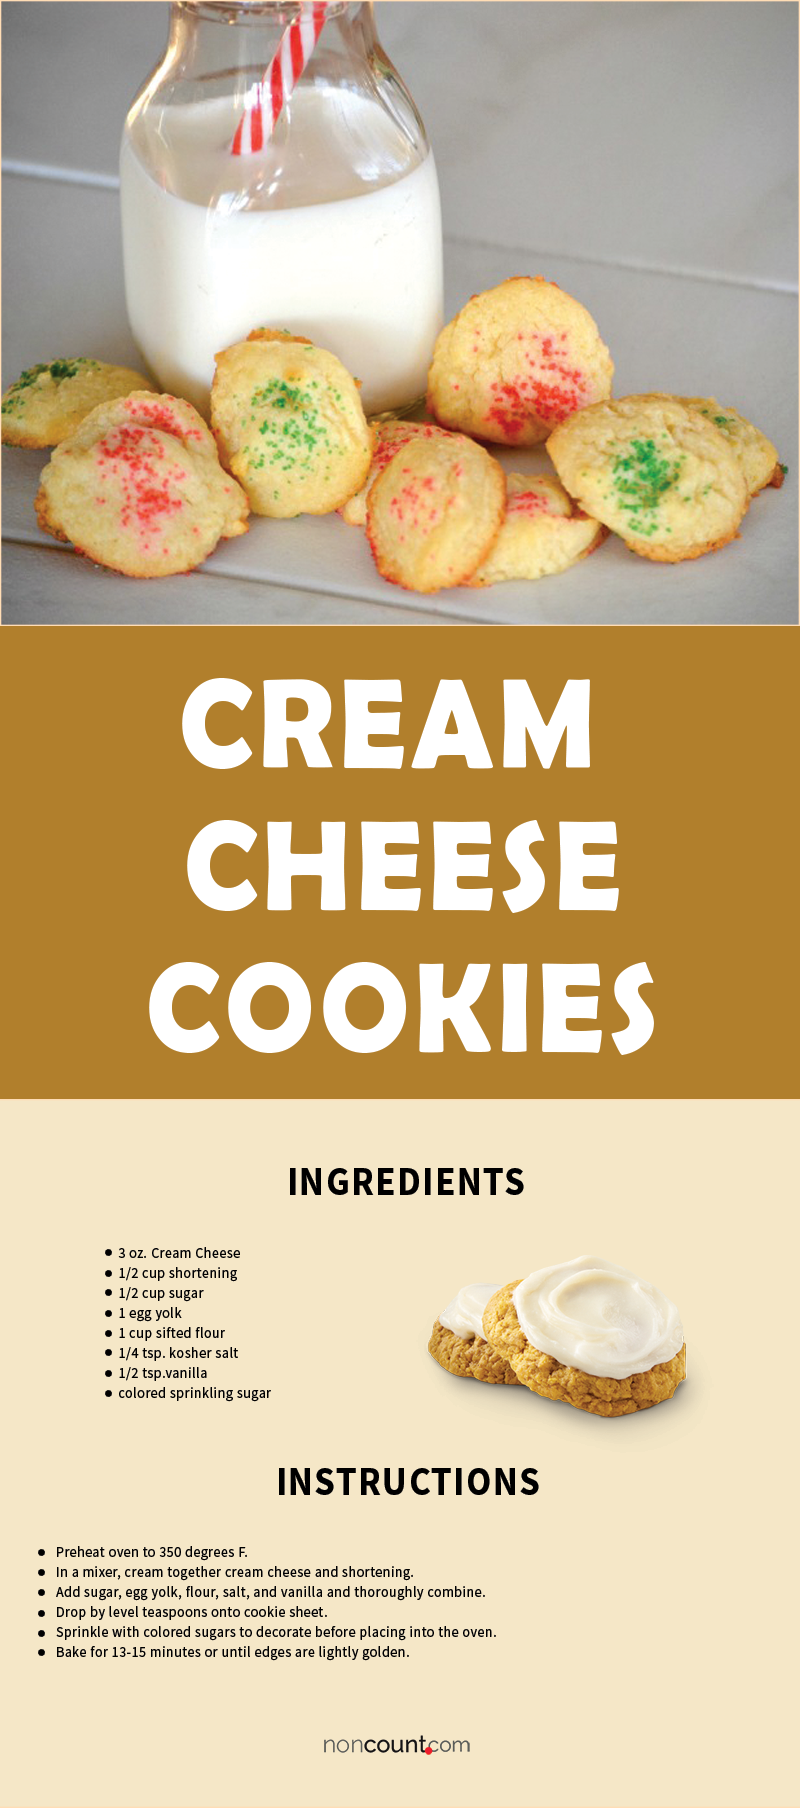 Cream Cheese Cookies Recipe Image